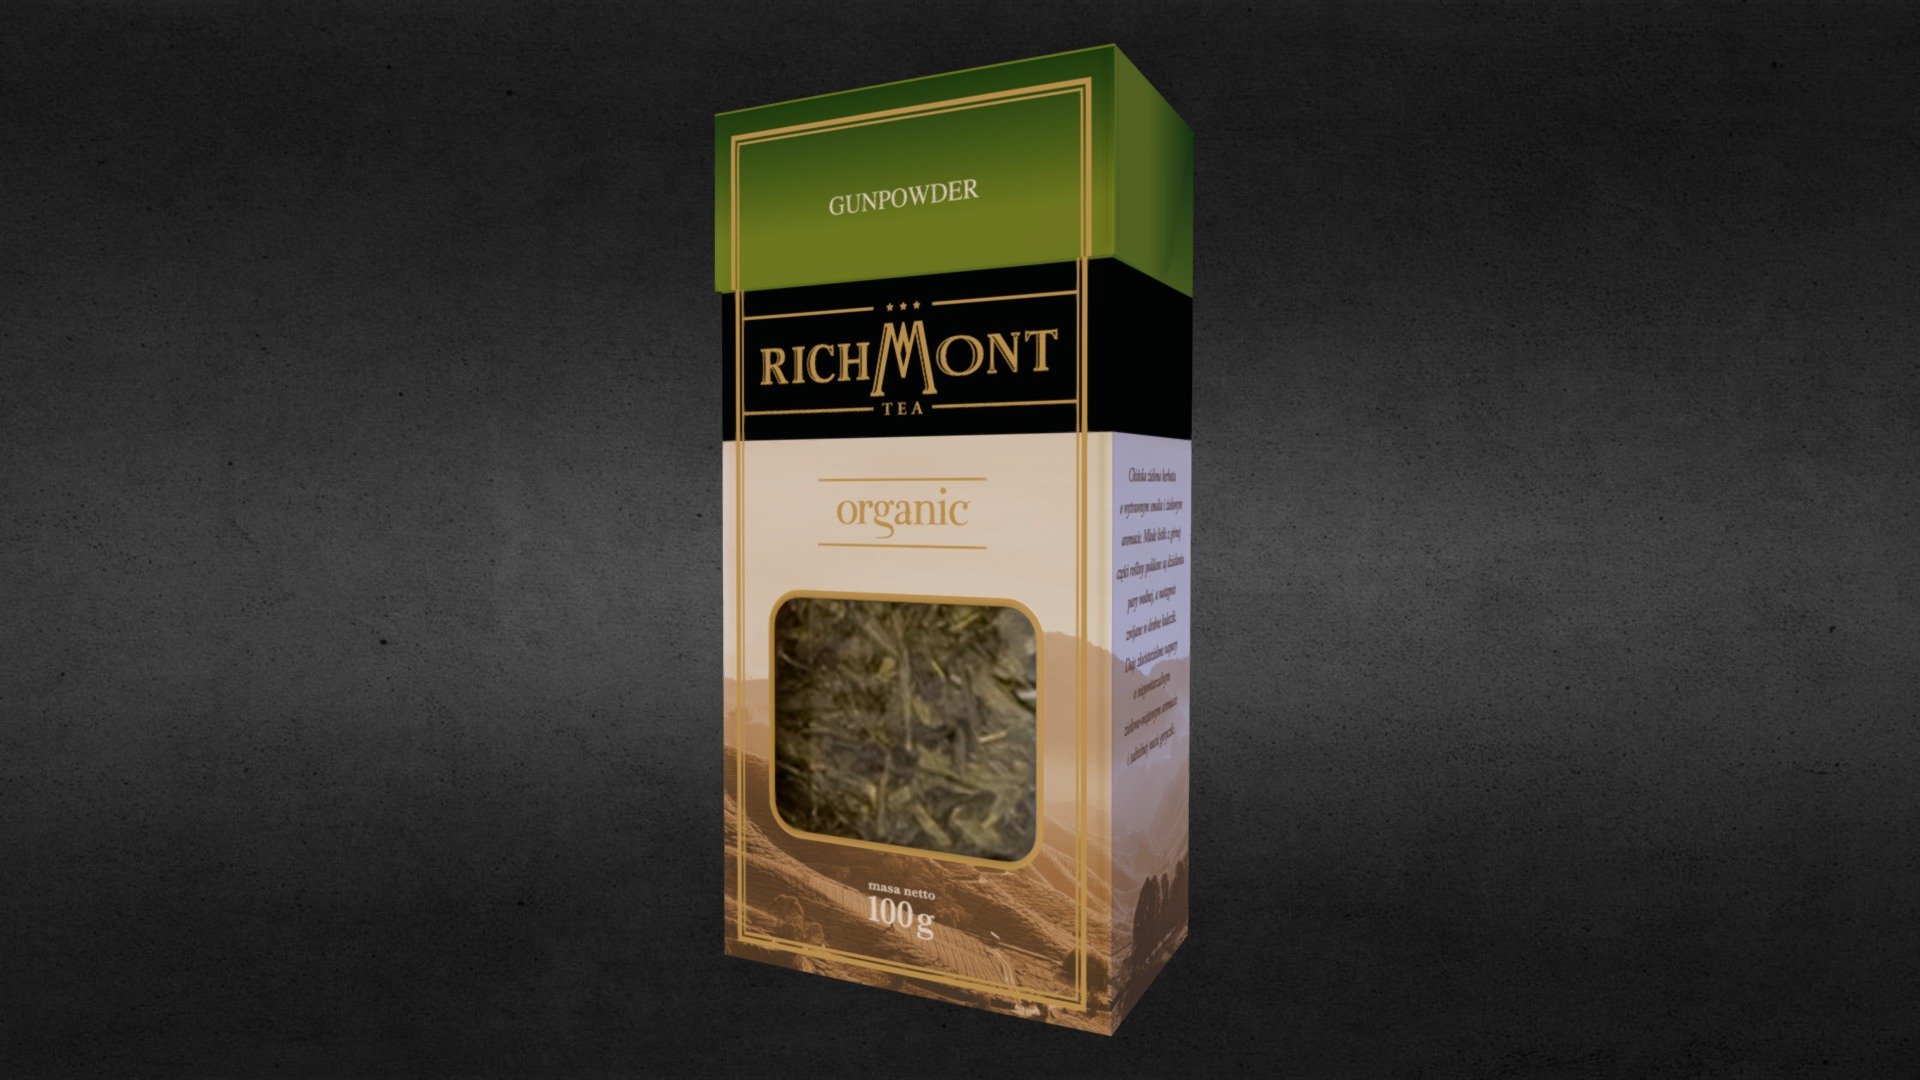 Gunpowder - Richmont tea